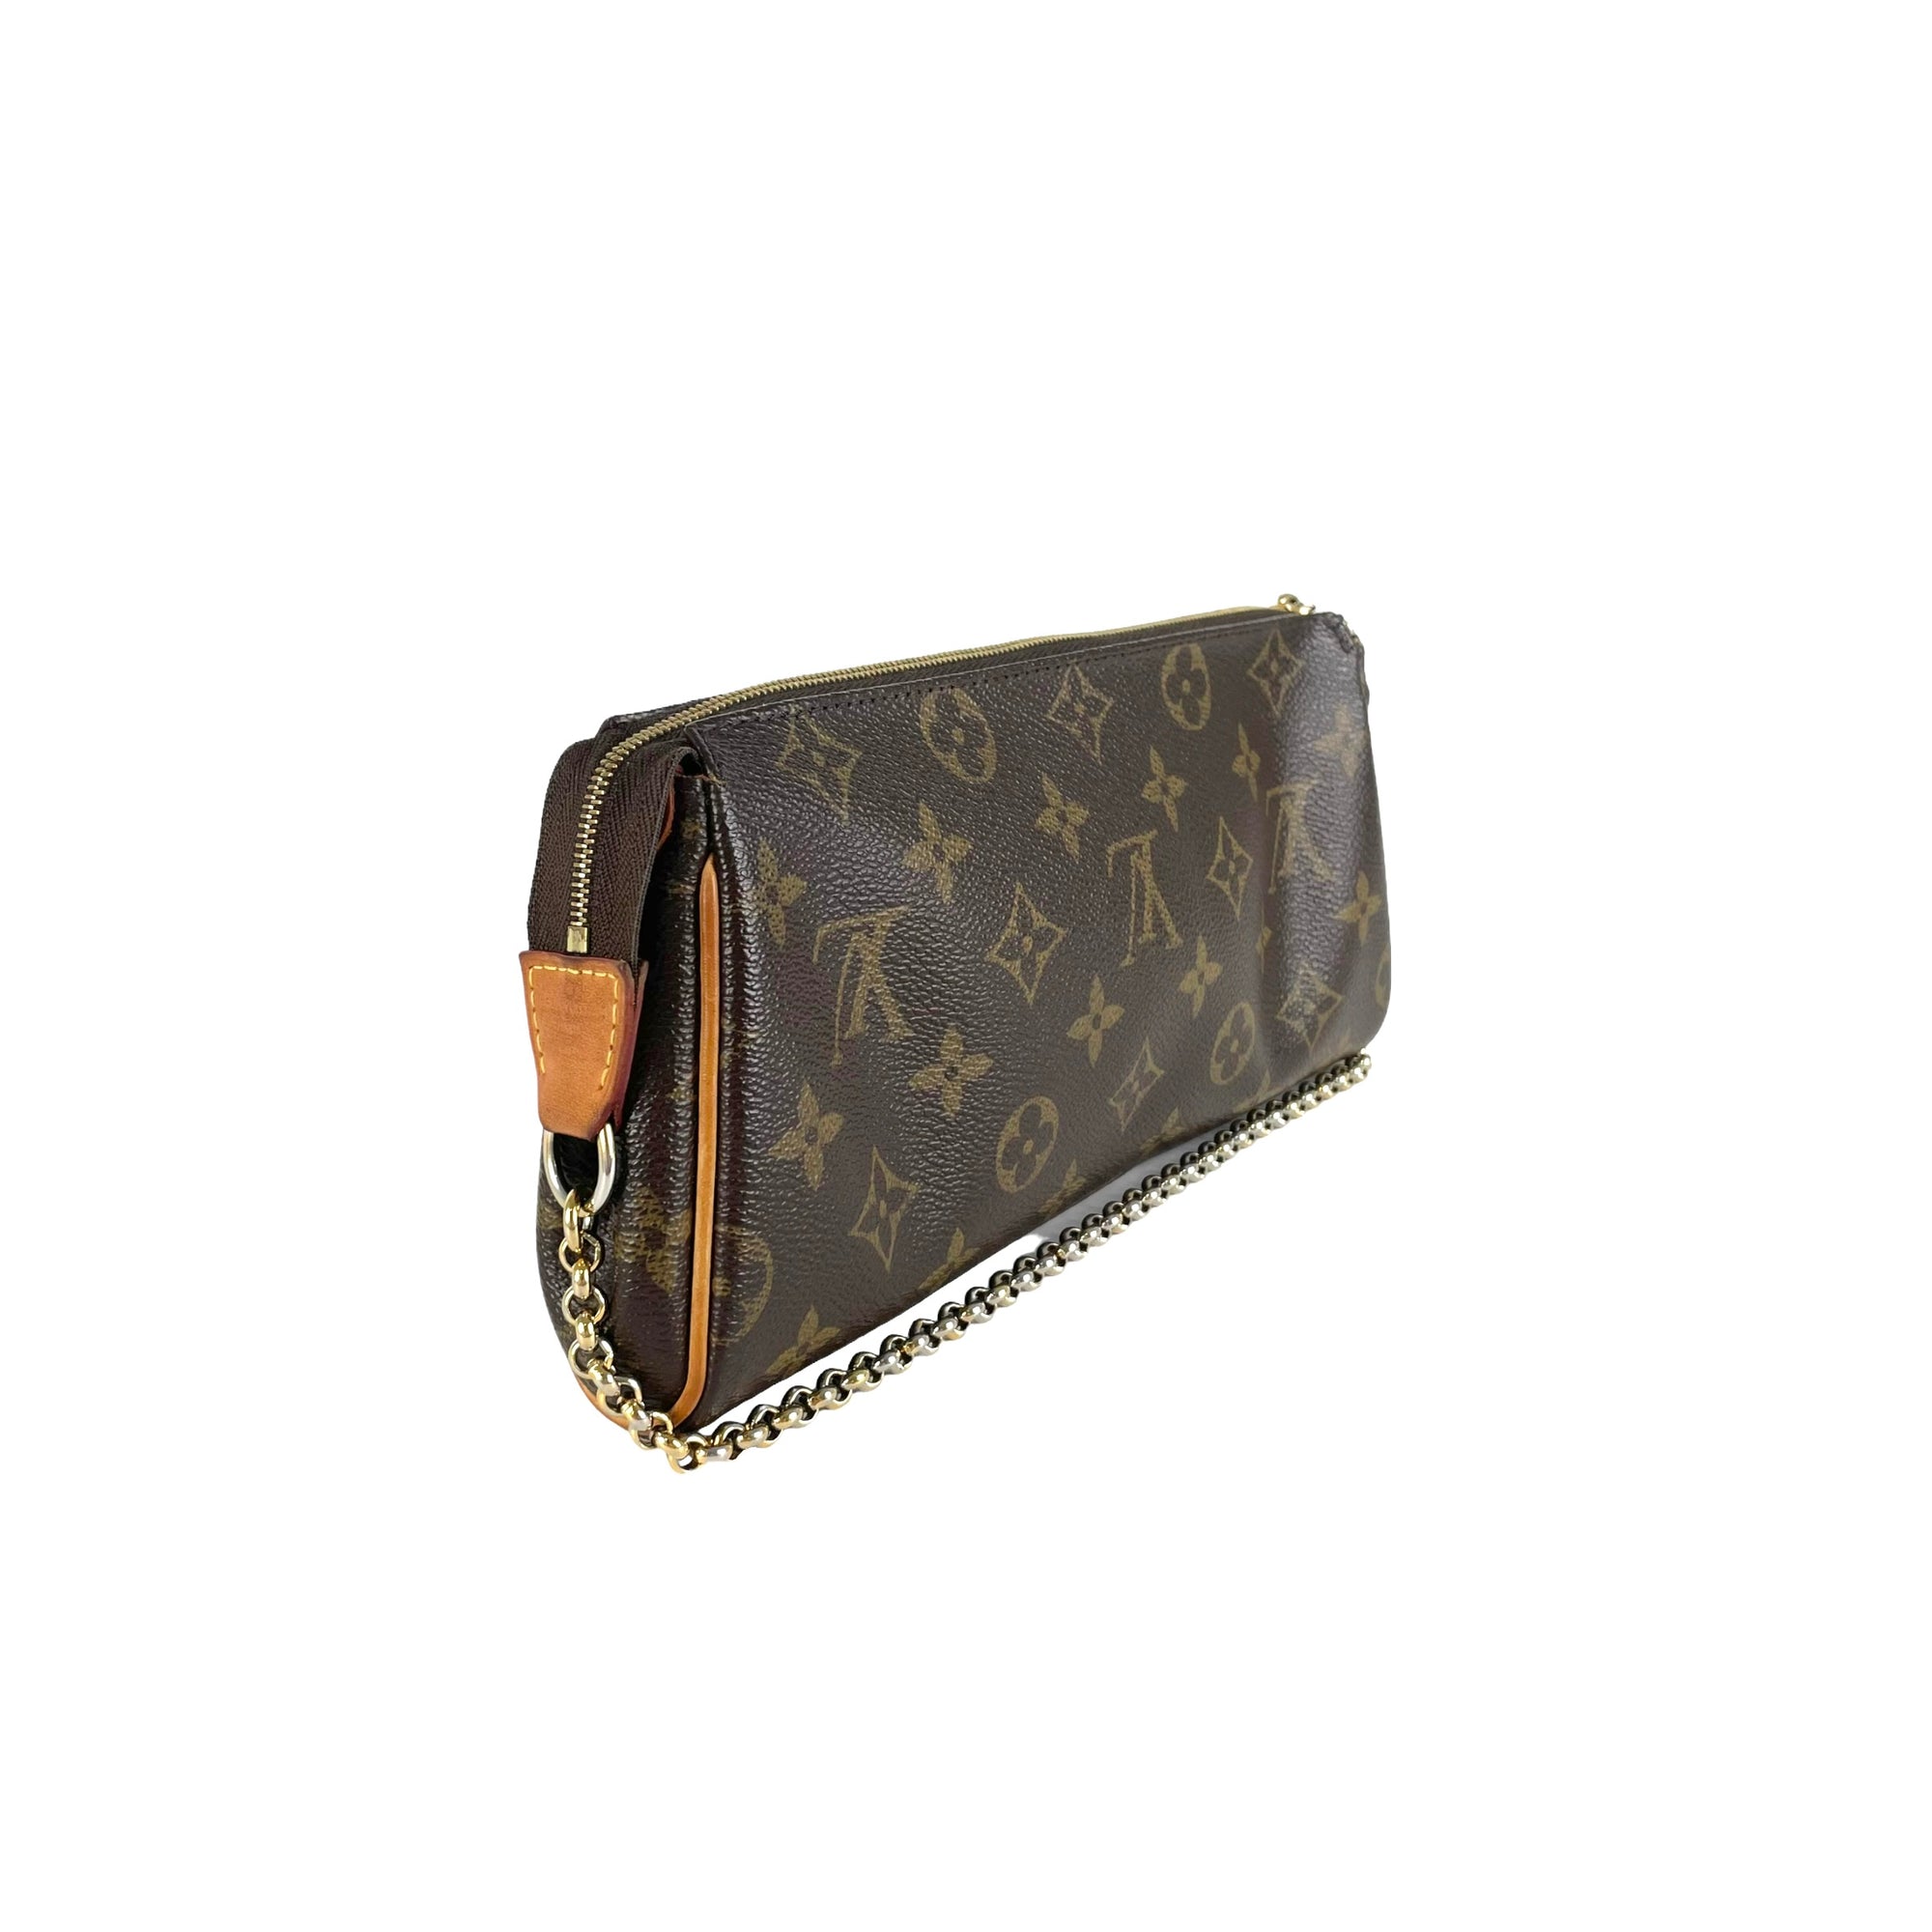 Authentic Louis Vuitton Eva Monogram Crossbody Handbag ❤TRUSTED 19YR  SELLER❤